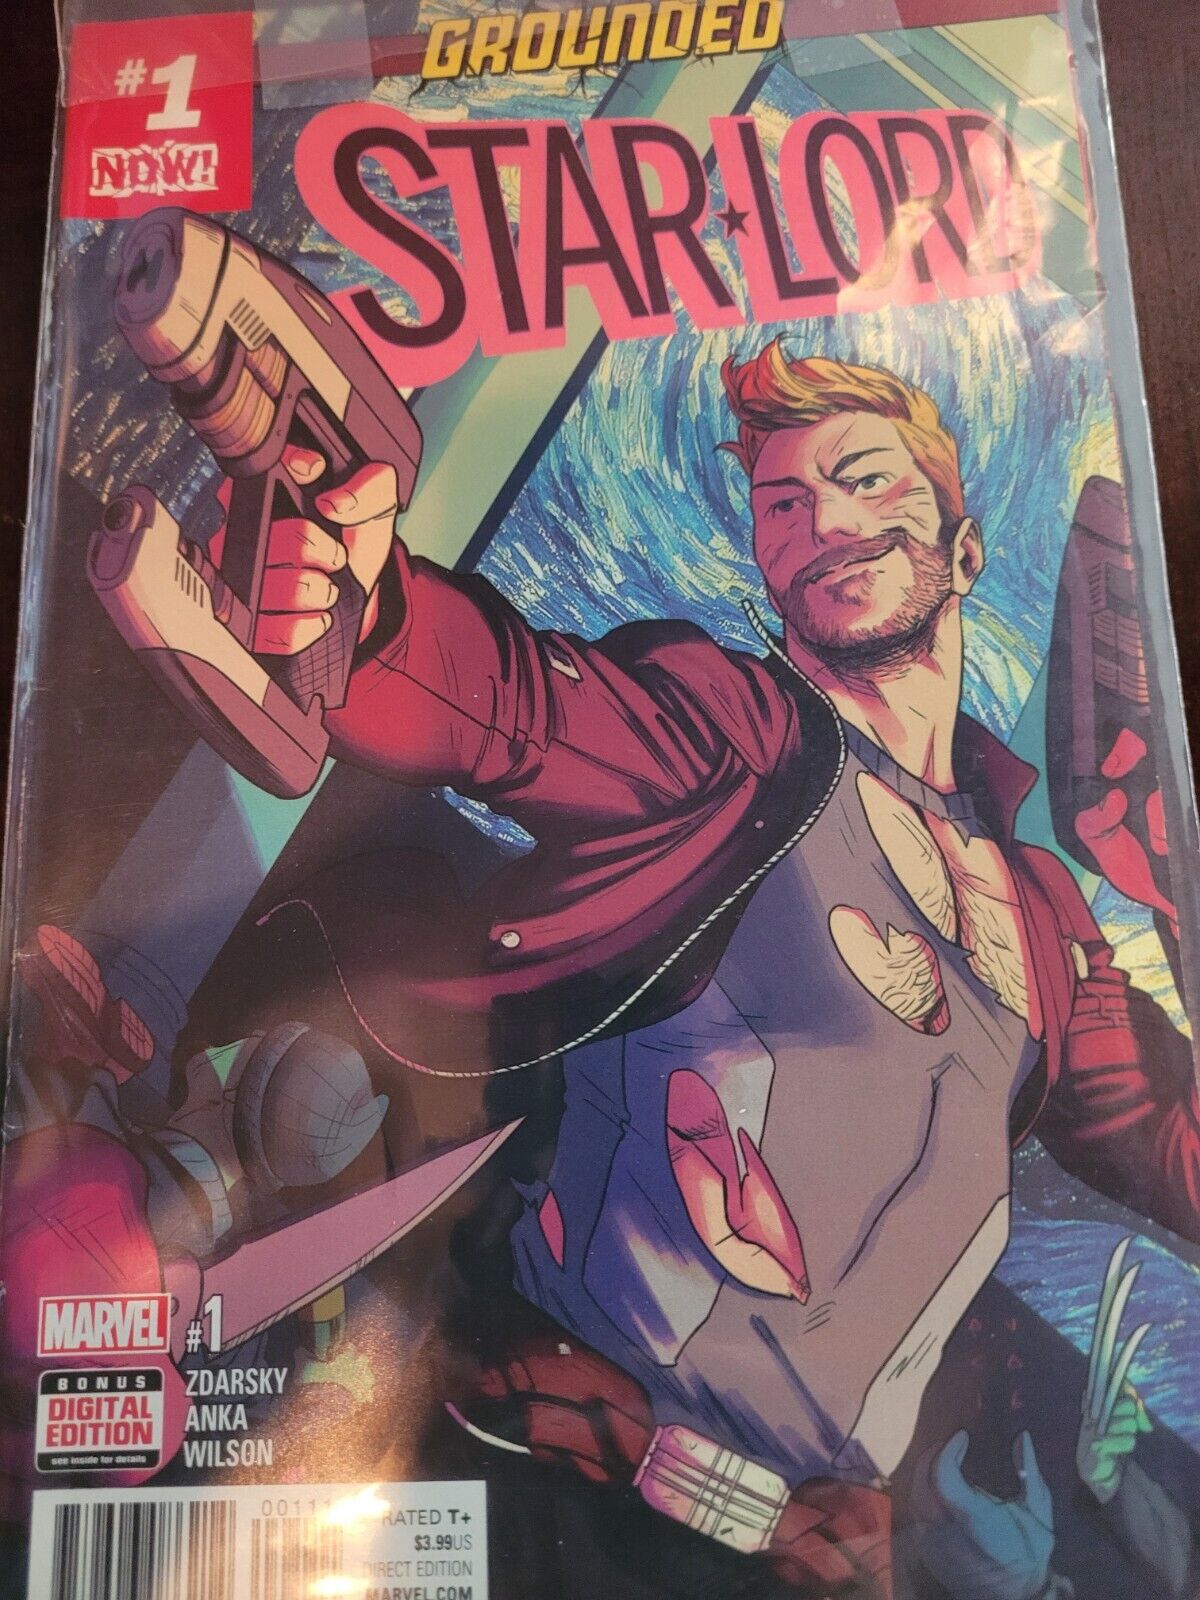 Star-Lord #1 (Marvel Comics February 2017)